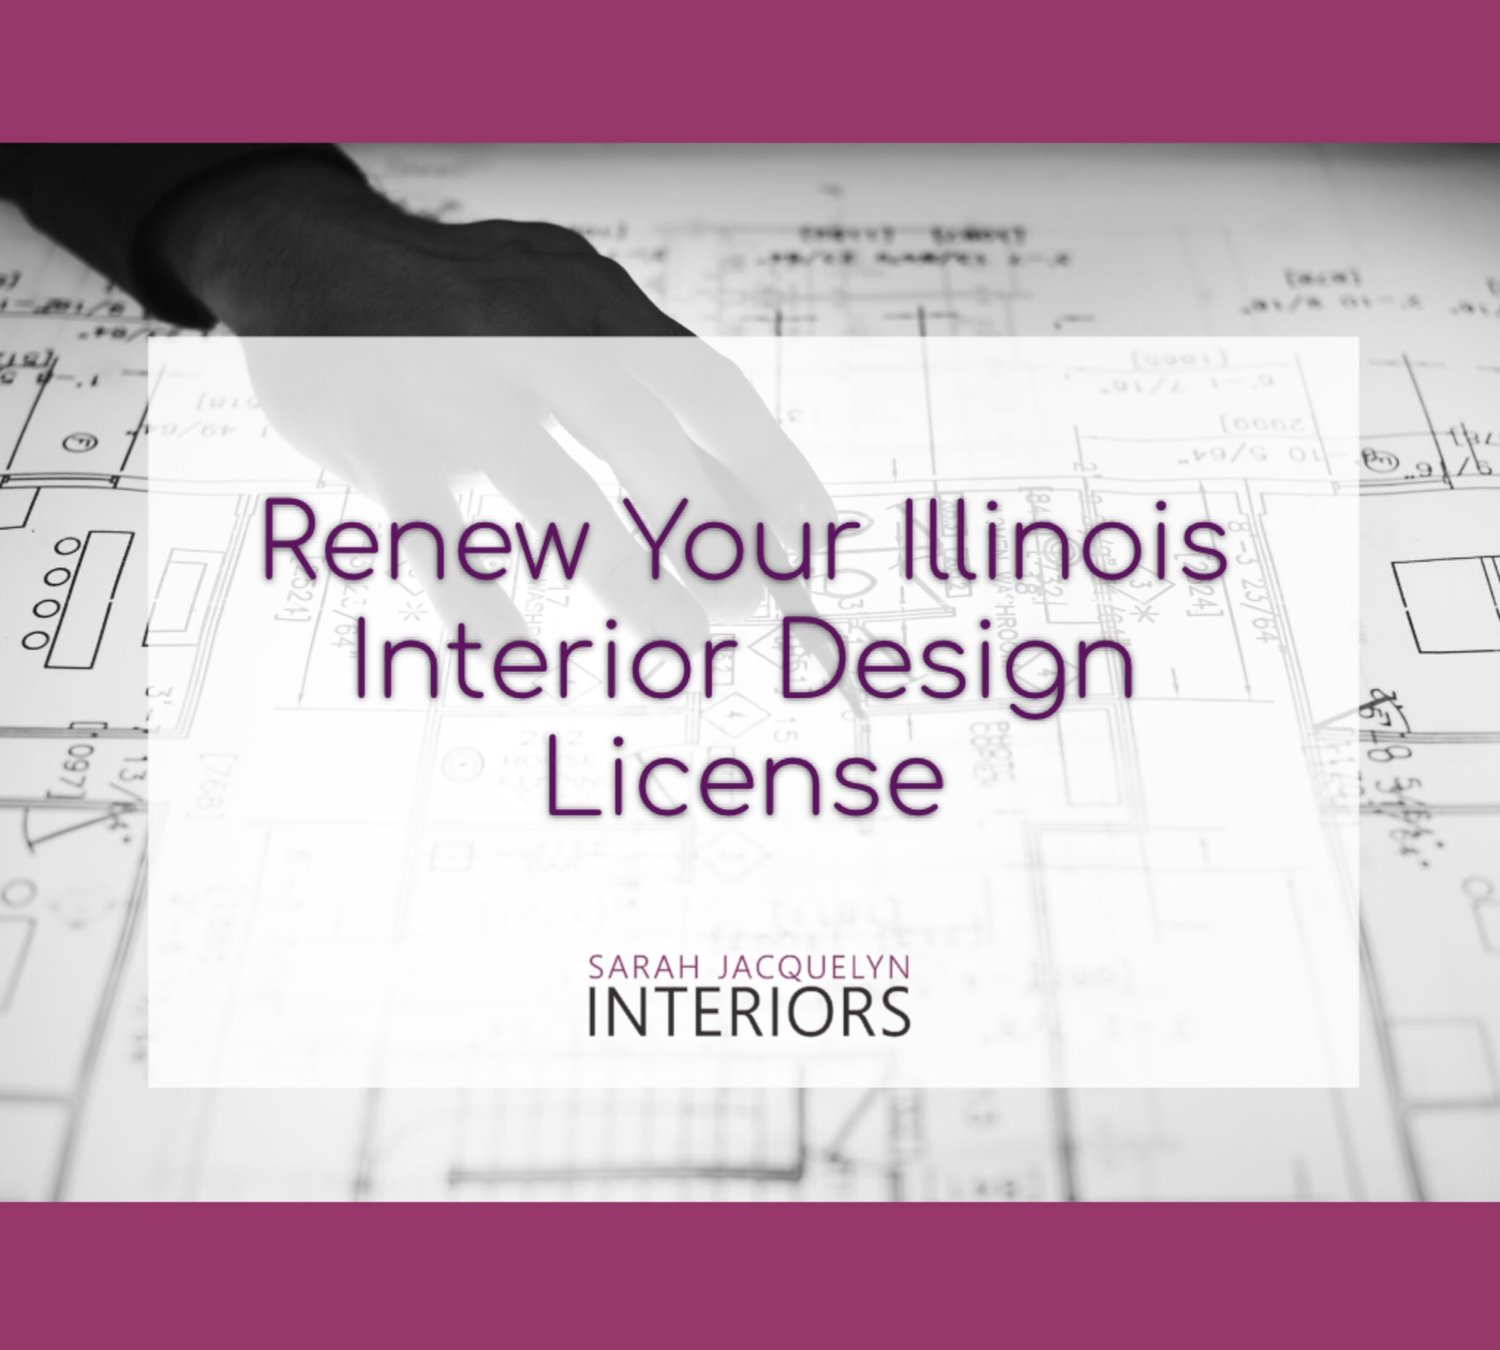 Renew Your Illinois Interior Design License Expires August 31st